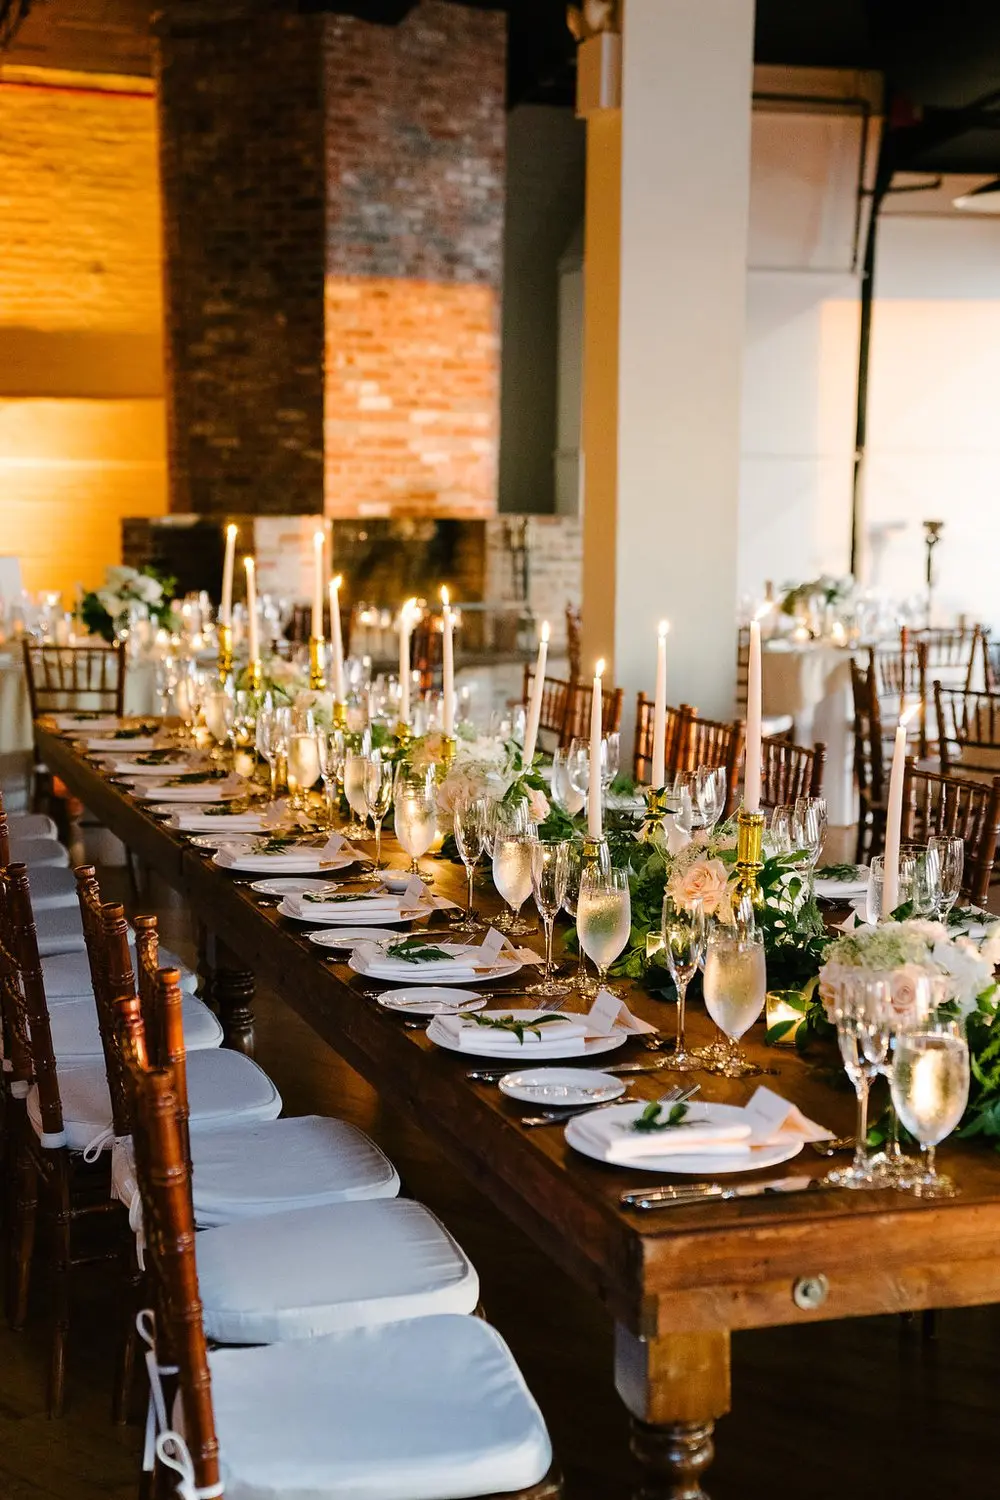 Festive banquet table floral and candle-lit centerpiece.